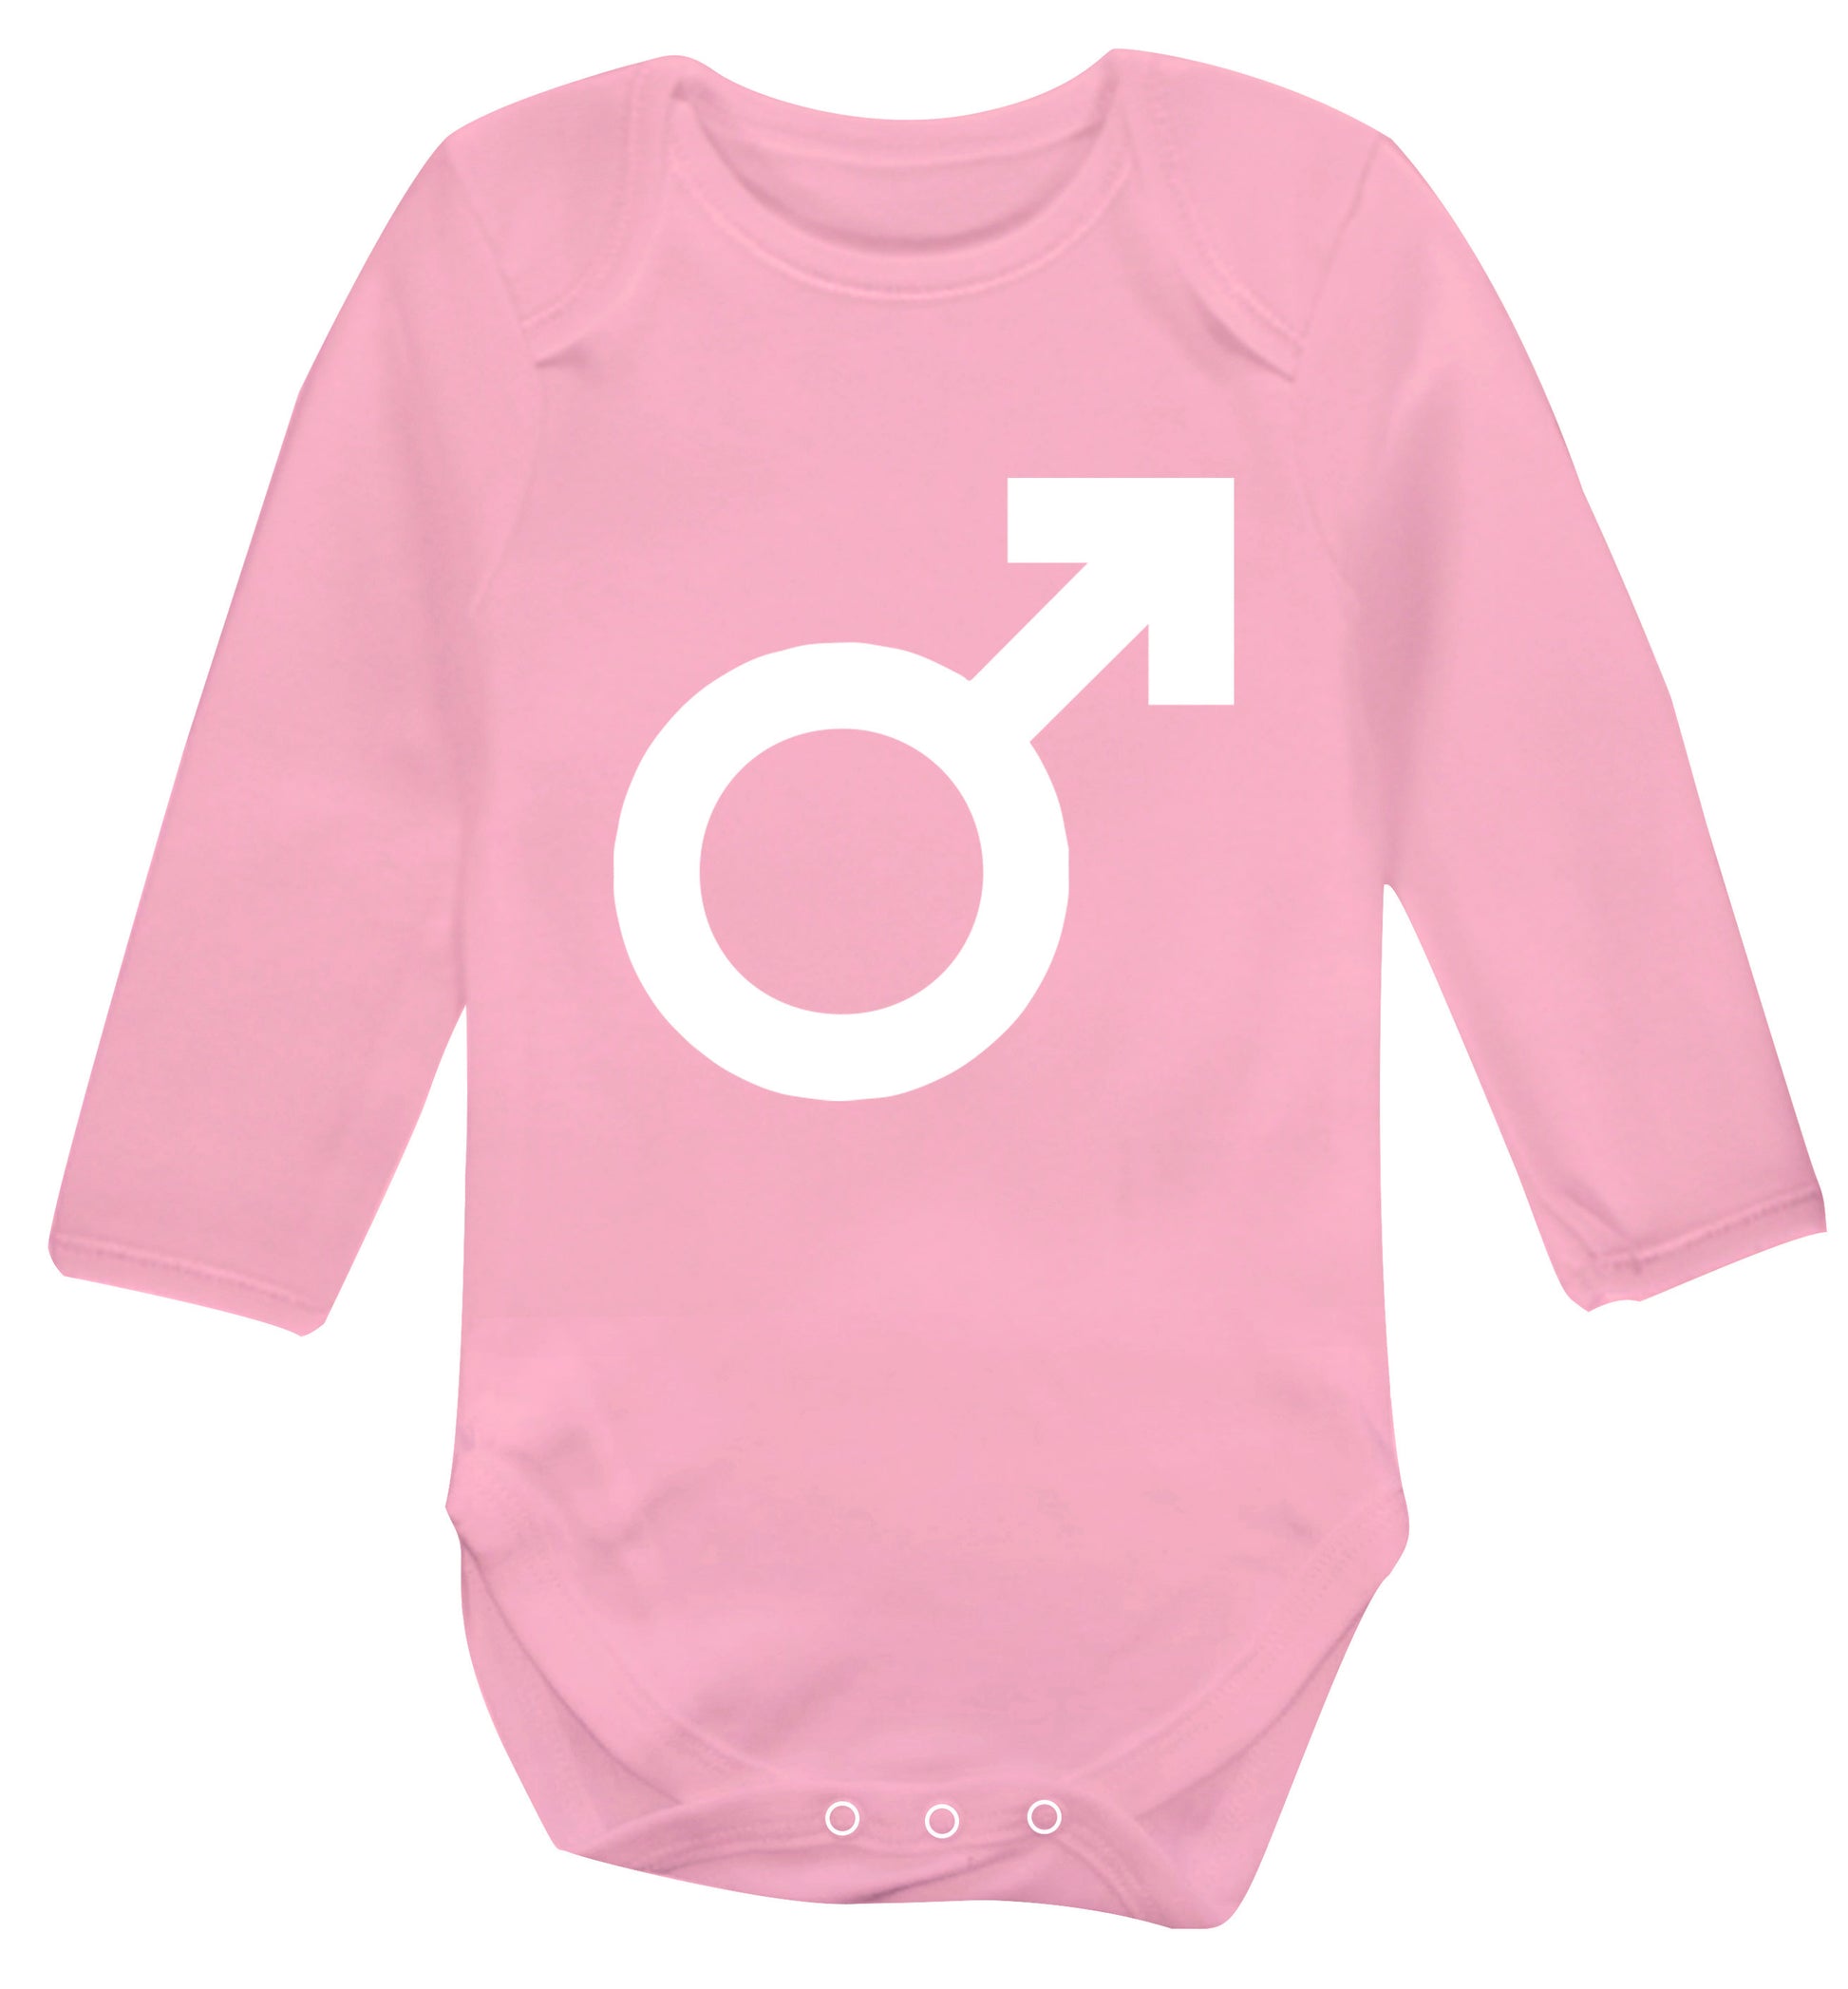 Male symbol large Baby Vest long sleeved pale pink 6-12 months